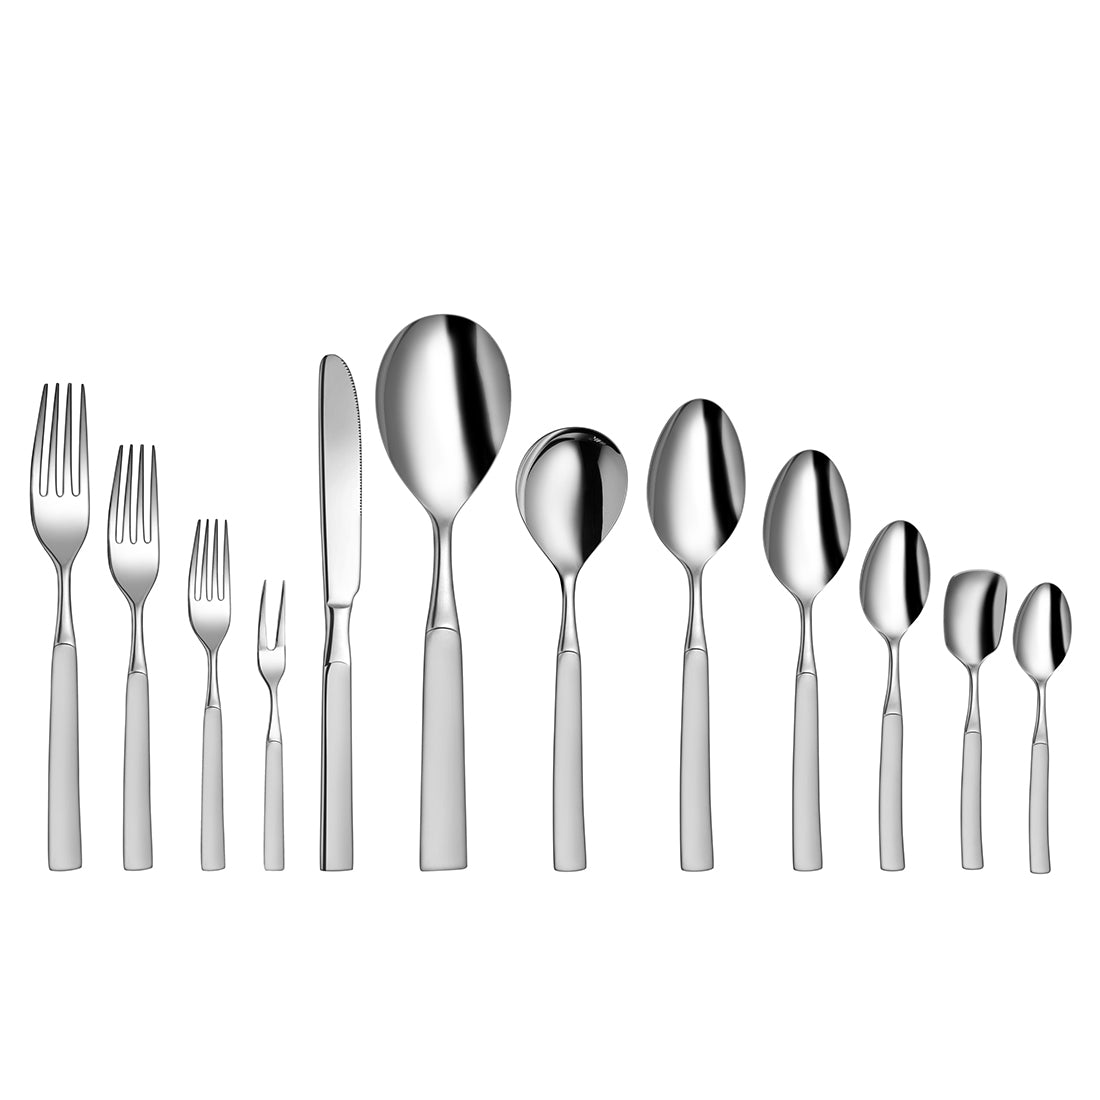 Stainless Steel Cutlery Jewel